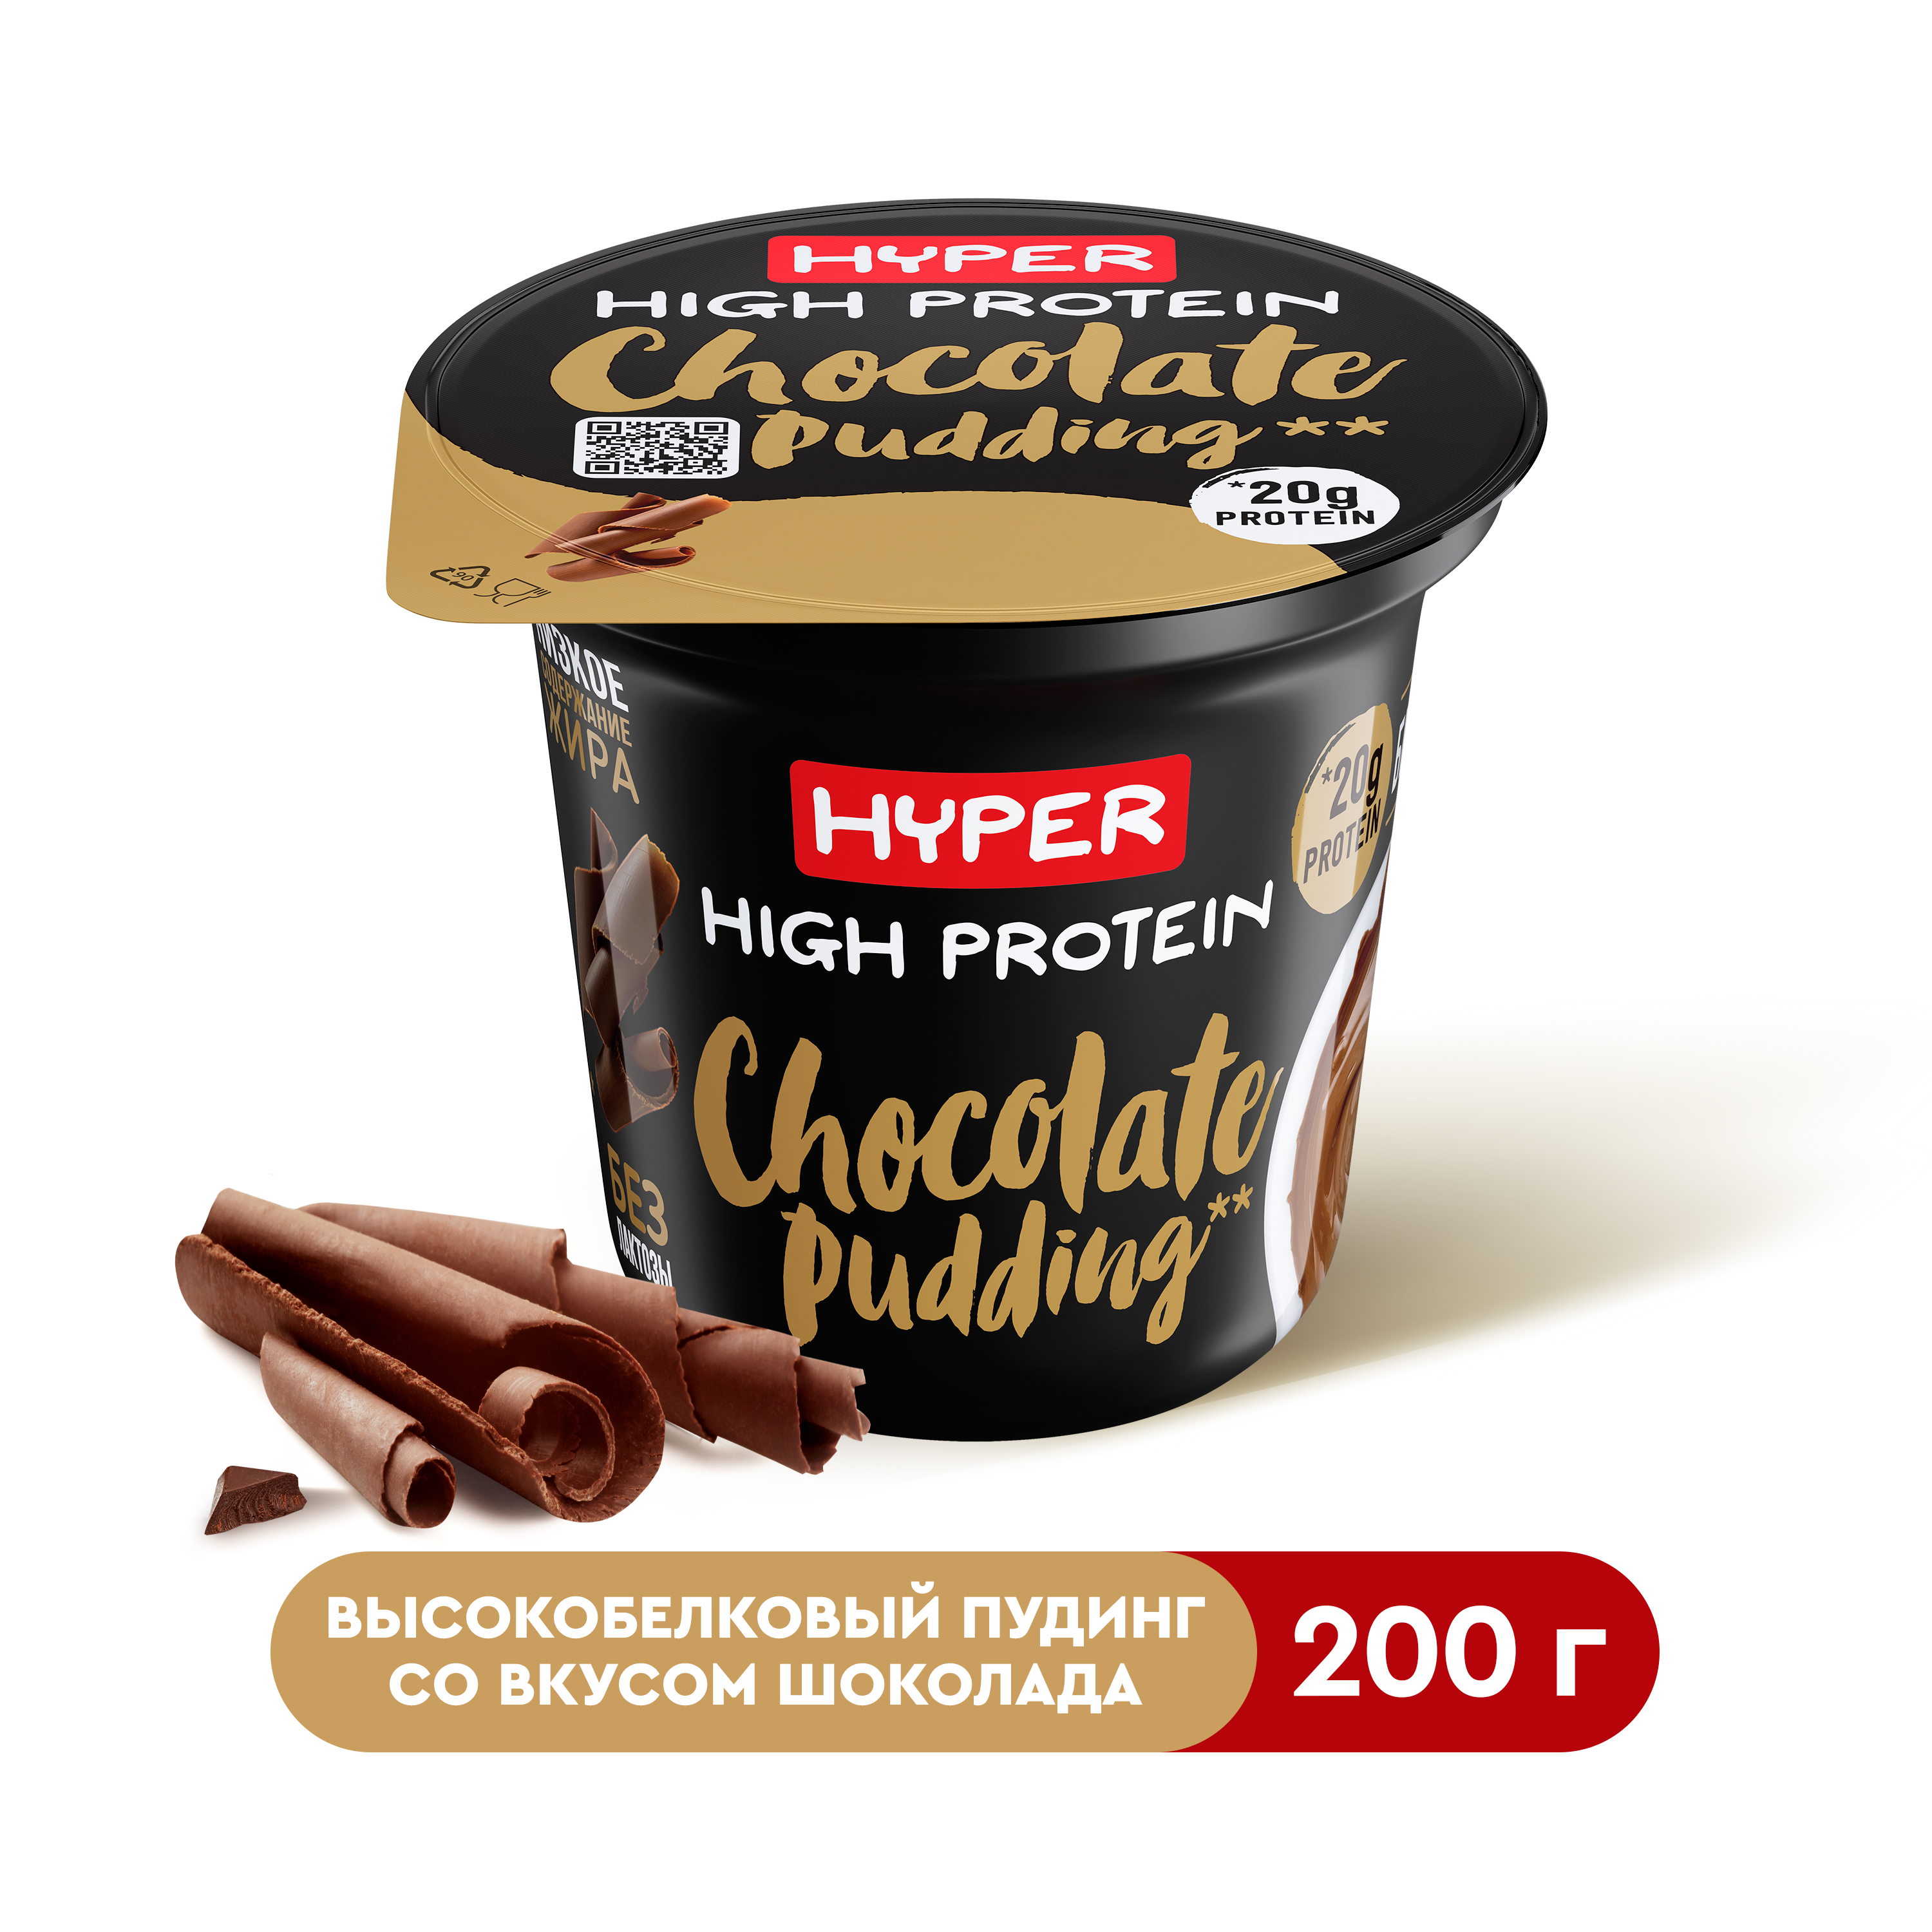 Пудинг Ehrmann Шоколад высокобелковый 1,5% бзмж 200 г